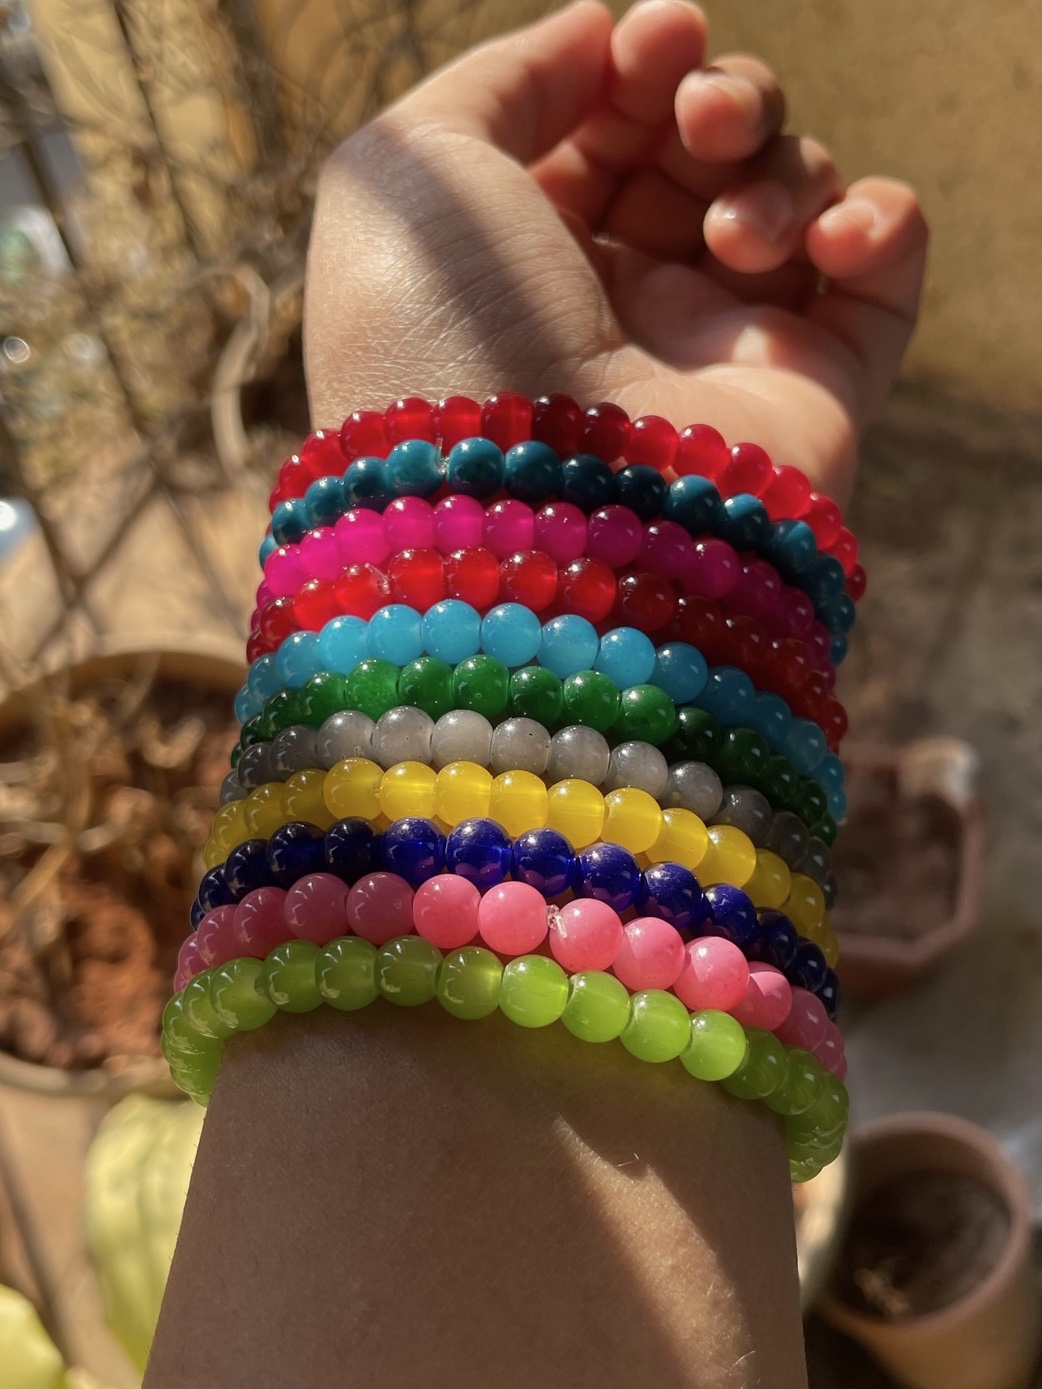 Glass Beads Bracelets – Grace Accessories